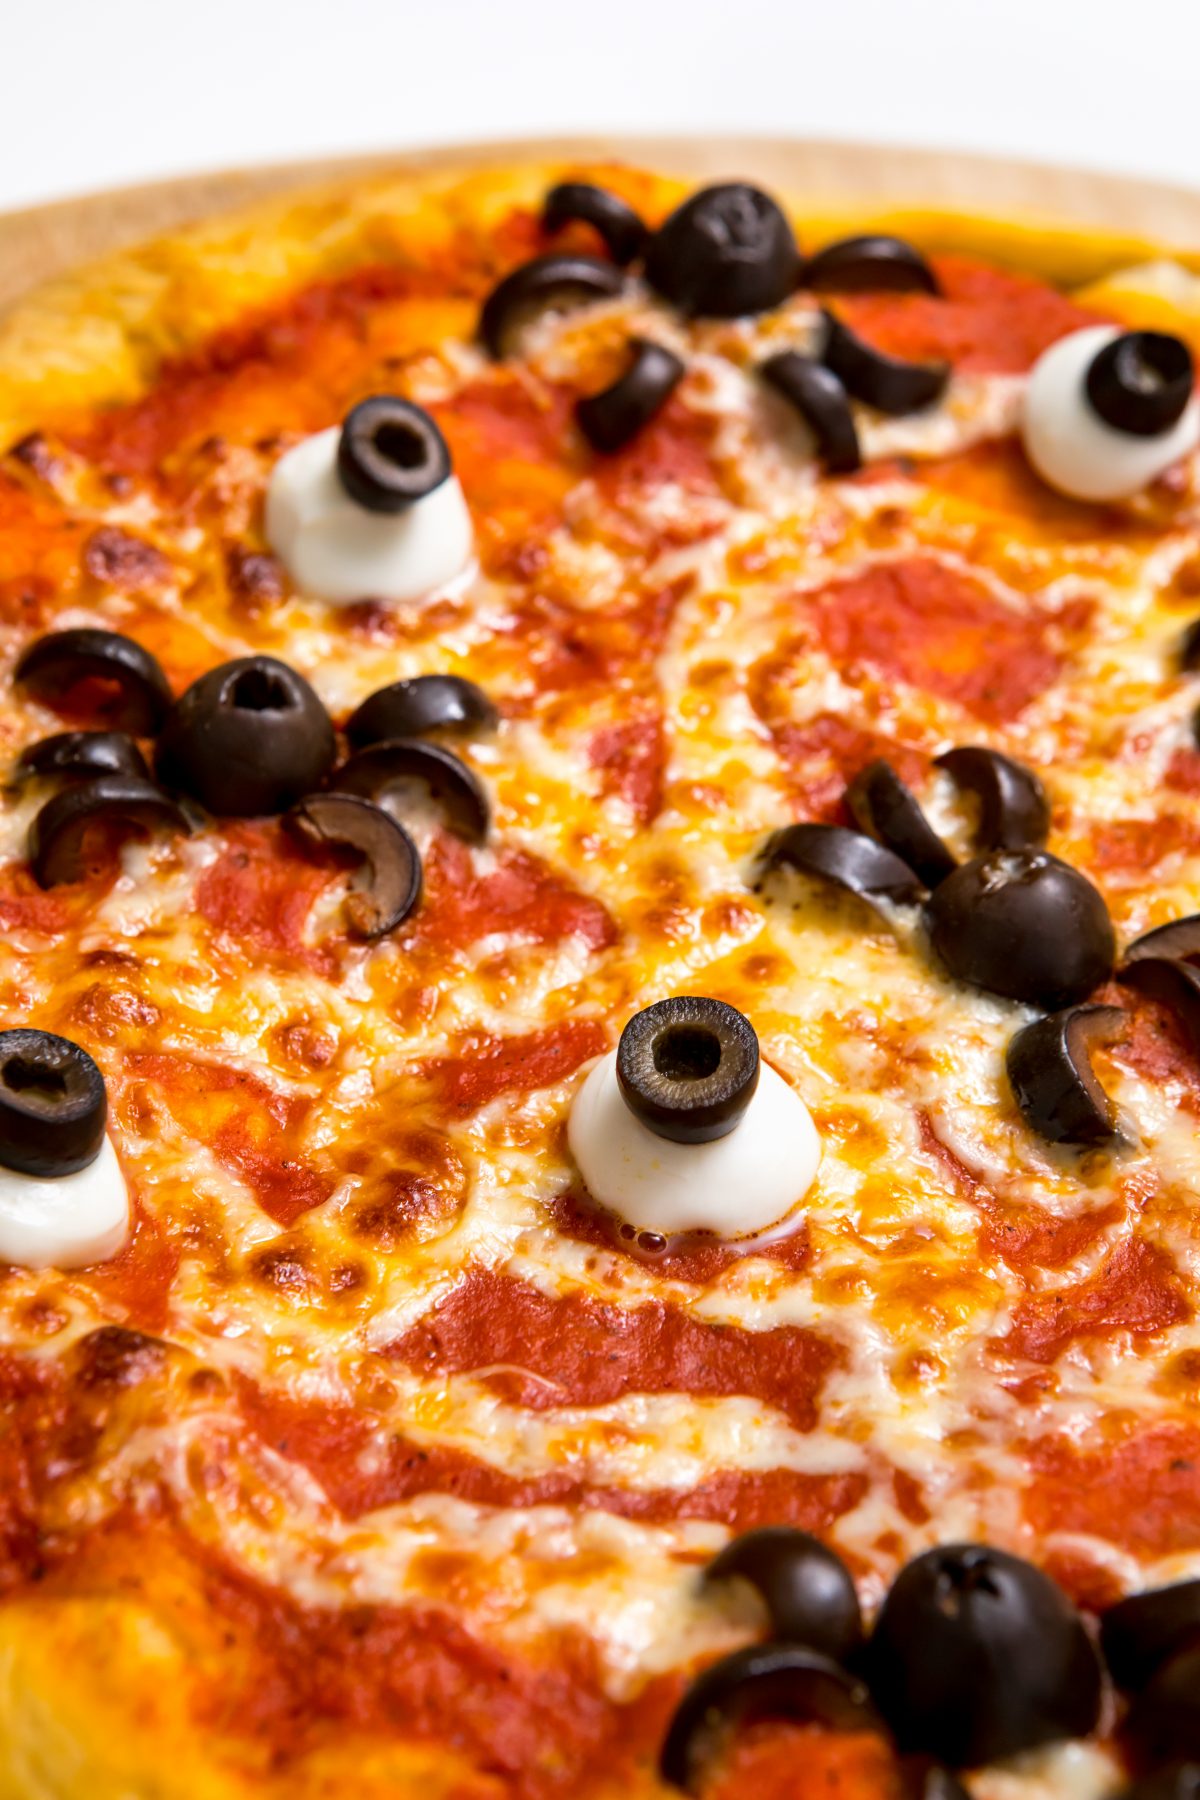 Kids’ favorite Halloween pizza